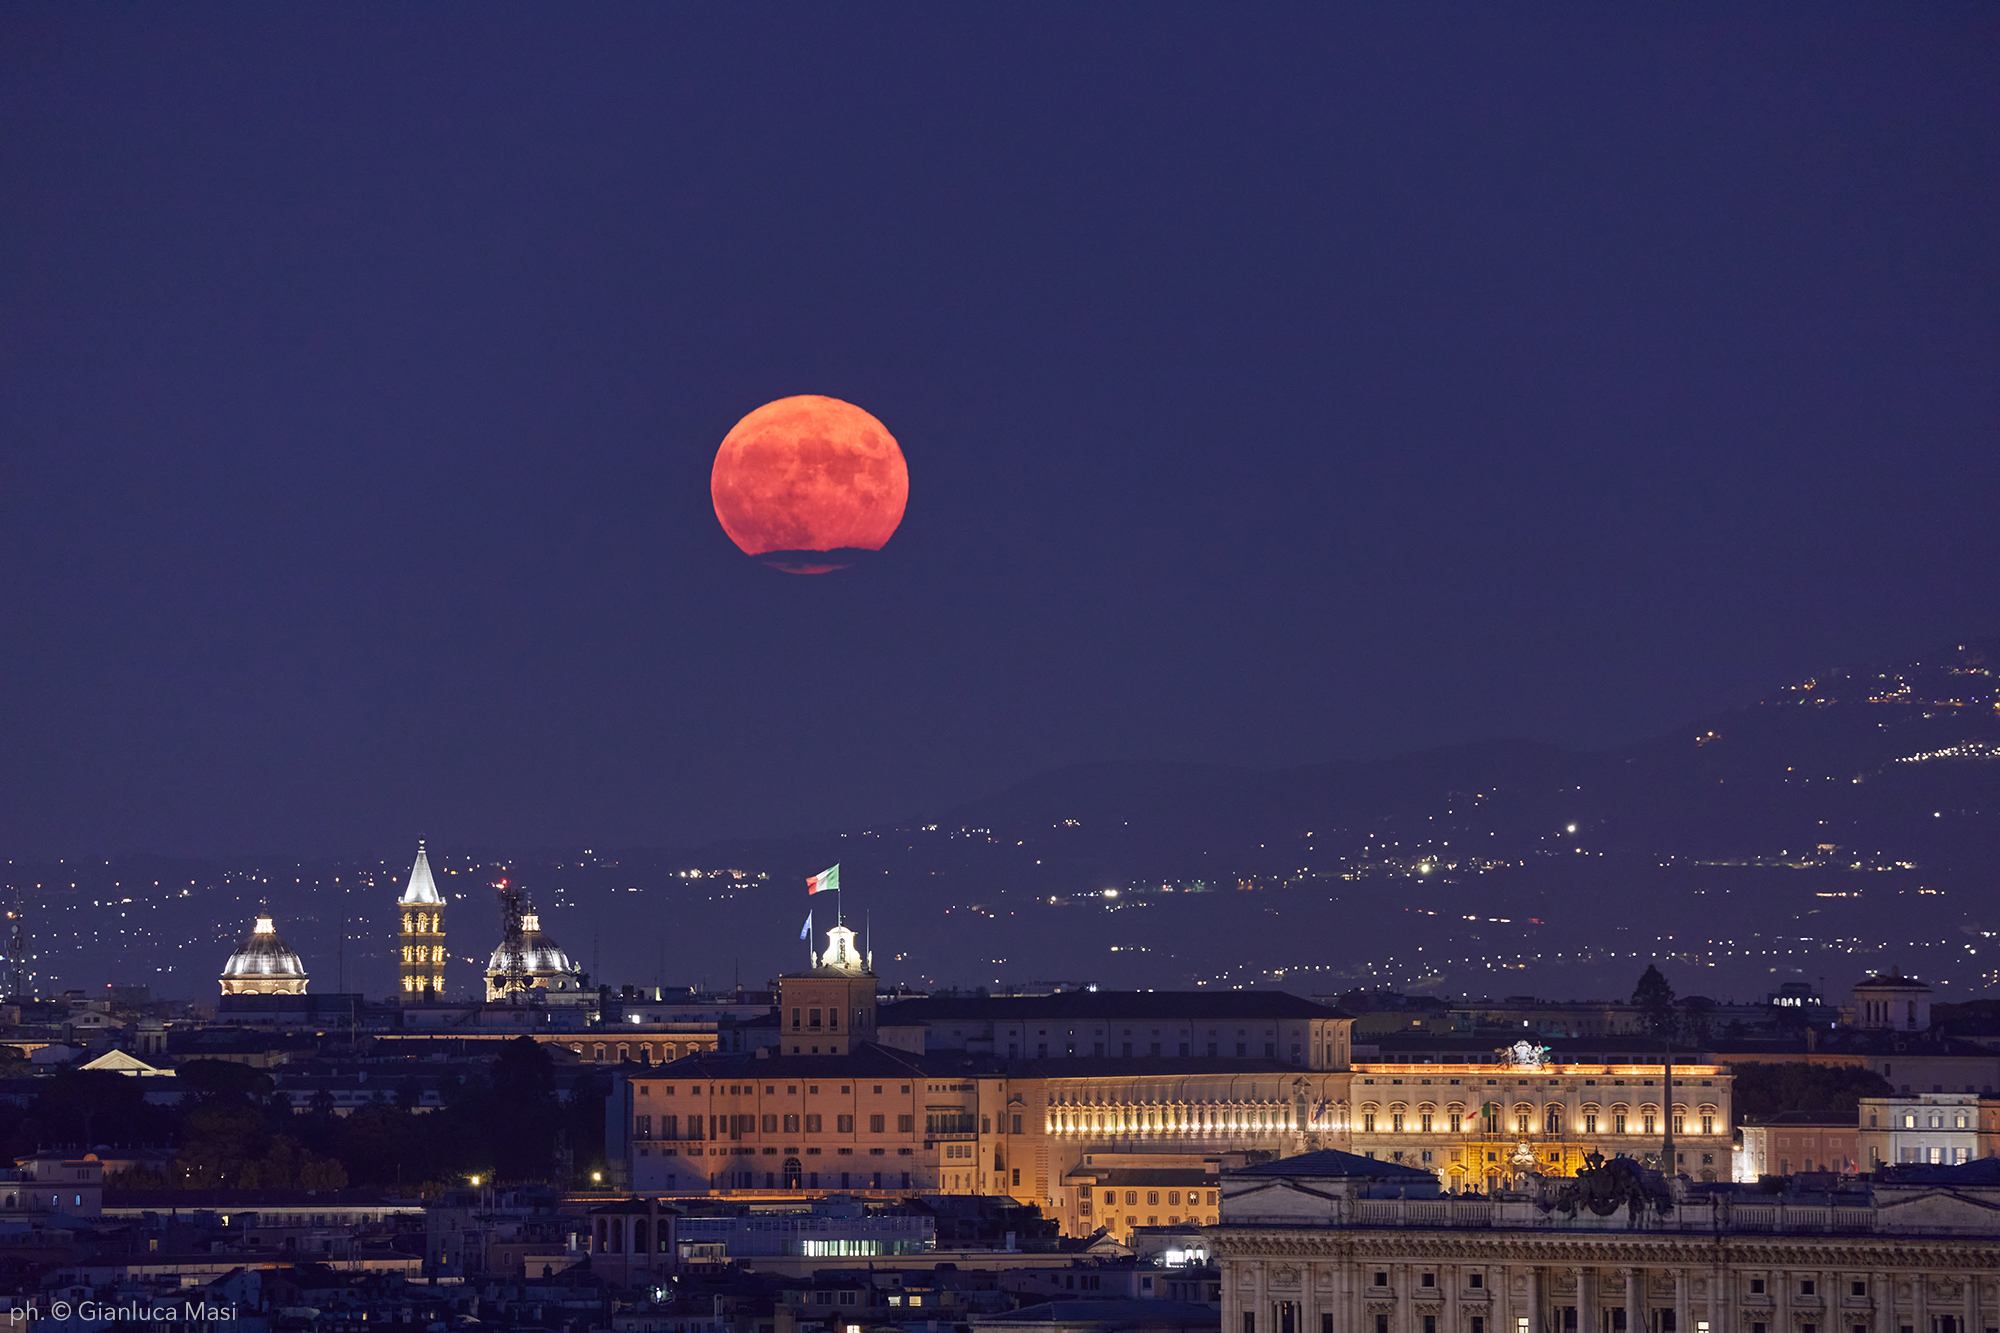 The Aug. 2021 Full Moon rises above “Palazzo del Quirinale”, in Rome.